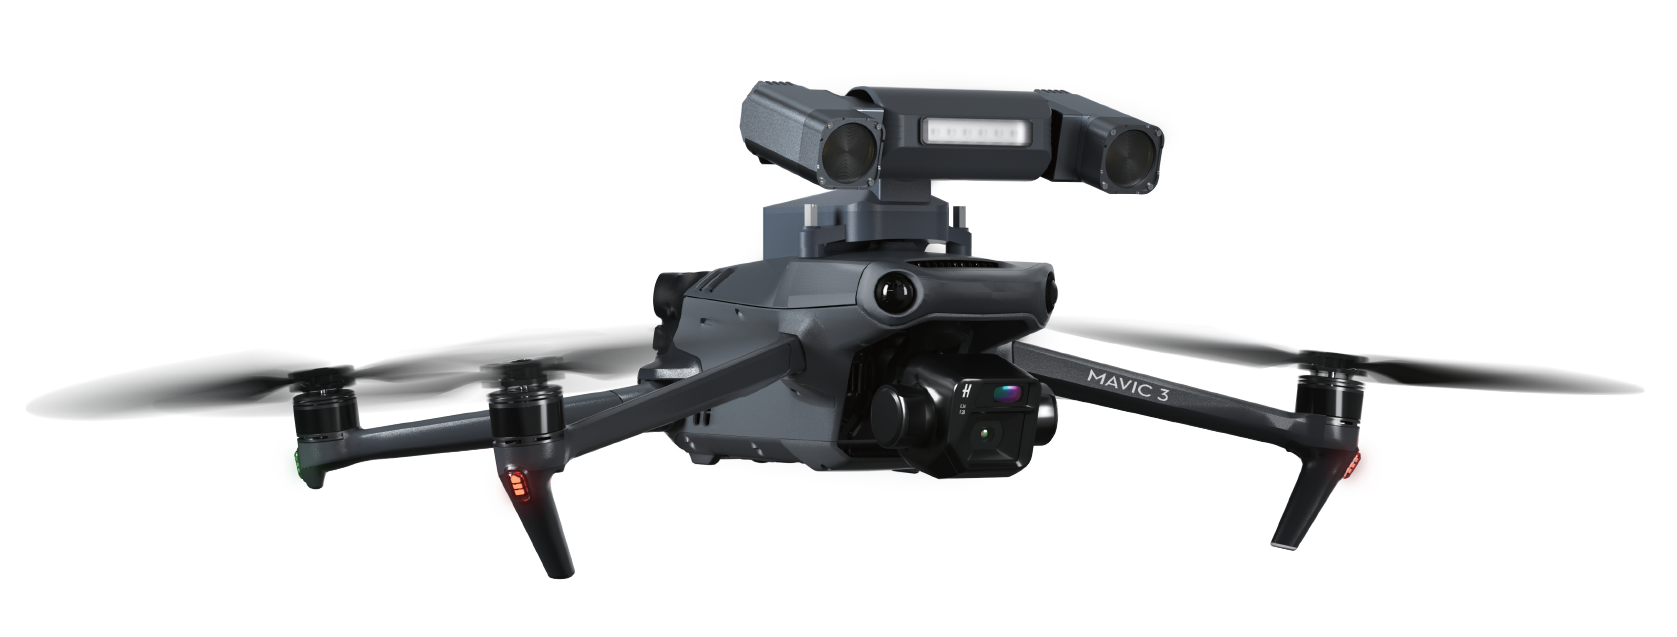 MAVIC 3 ENTERPRISE GIMBAL SEARCHLIGHT - DroneLabs.ca